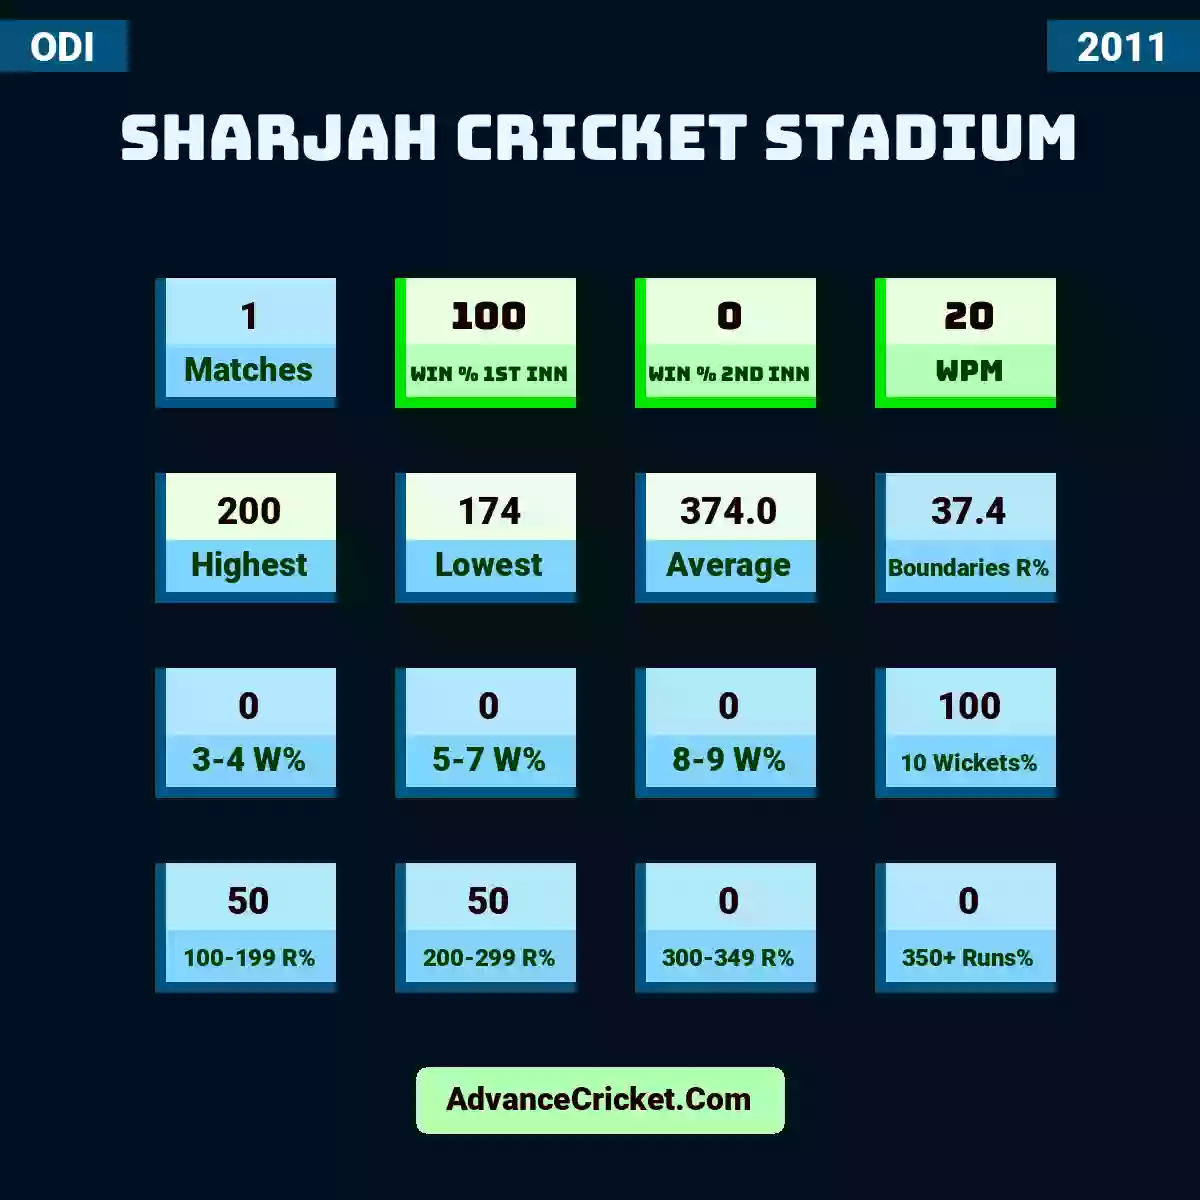 Image showing Sharjah Cricket Stadium with Matches: 1, Win % 1st Inn: 100, Win % 2nd Inn: 0, WPM: 20, Highest: 200, Lowest: 174, Average: 374.0, Boundaries R%: 37.4, 3-4 W%: 0, 5-7 W%: 0, 8-9 W%: 0, 10 Wickets%: 100, 100-199 R%: 50, 200-299 R%: 50, 300-349 R%: 0, 350+ Runs%: 0.